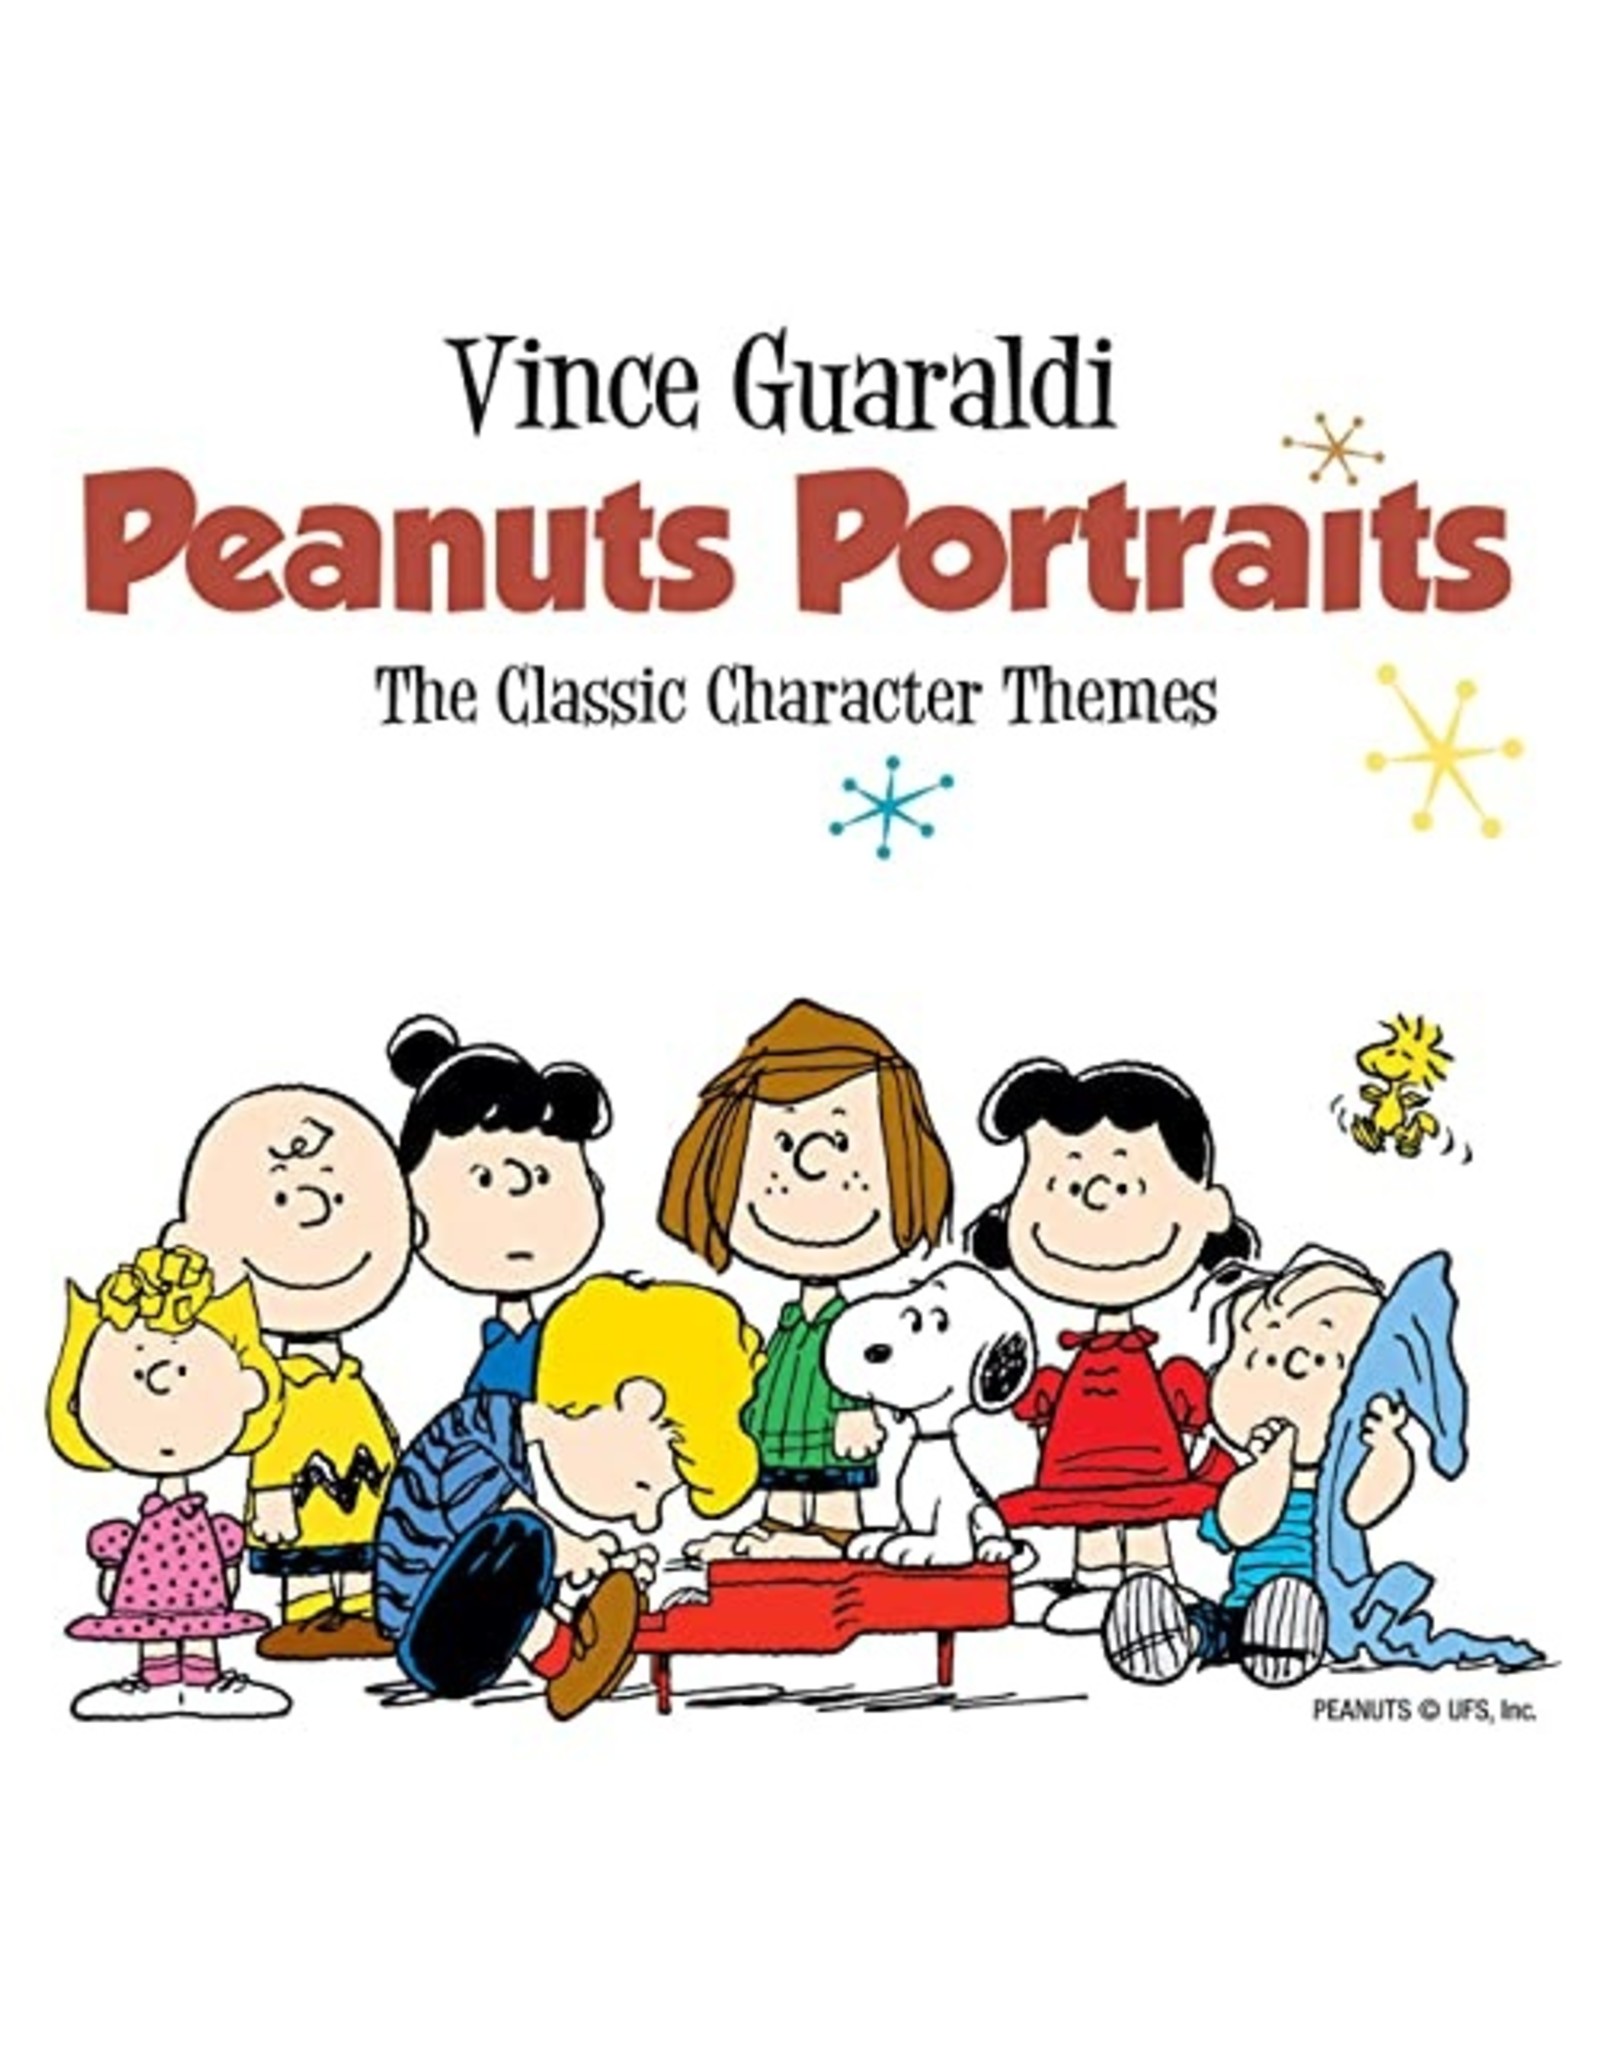 Vince Guaraldi - Peanuts Portraits: Classic Character Themes